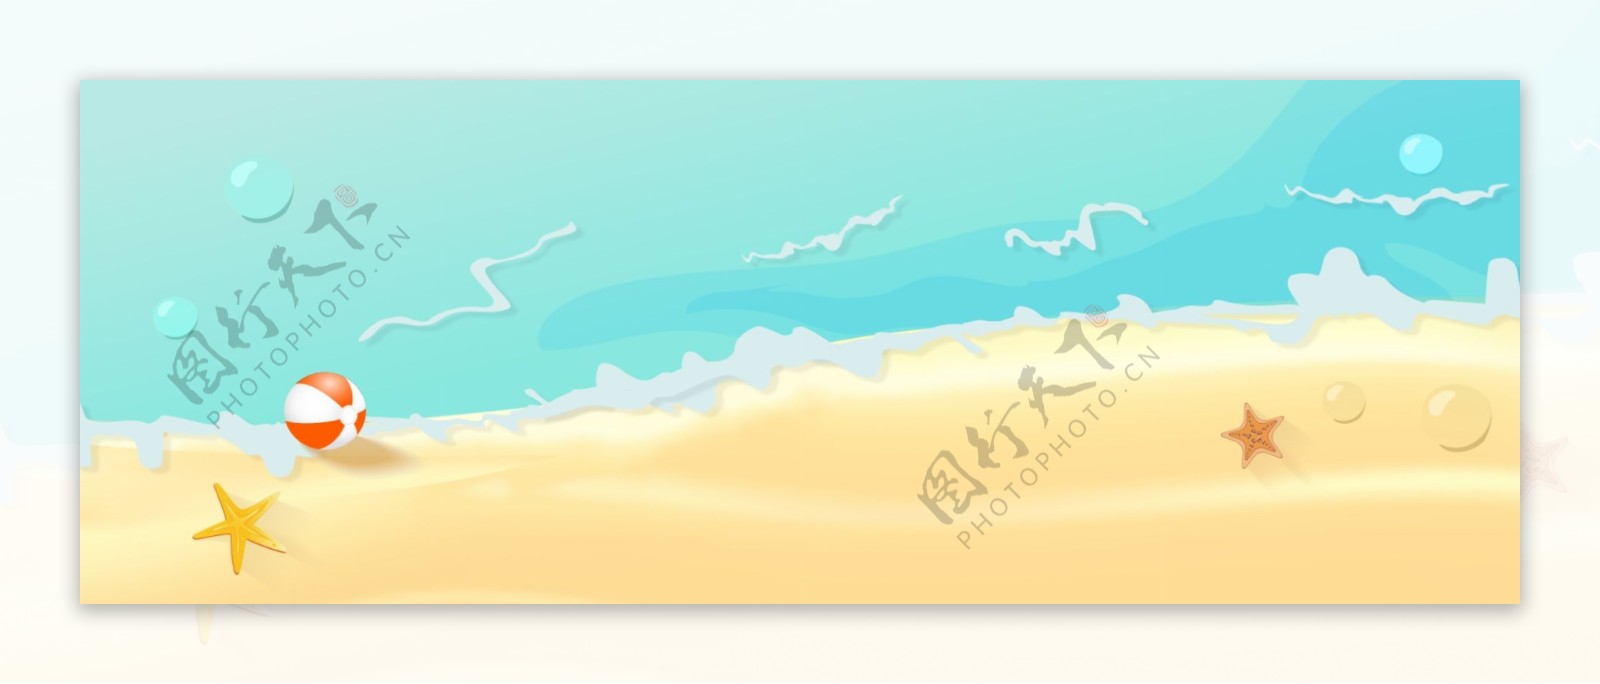 卡通浪漫沙滩海水banner背景